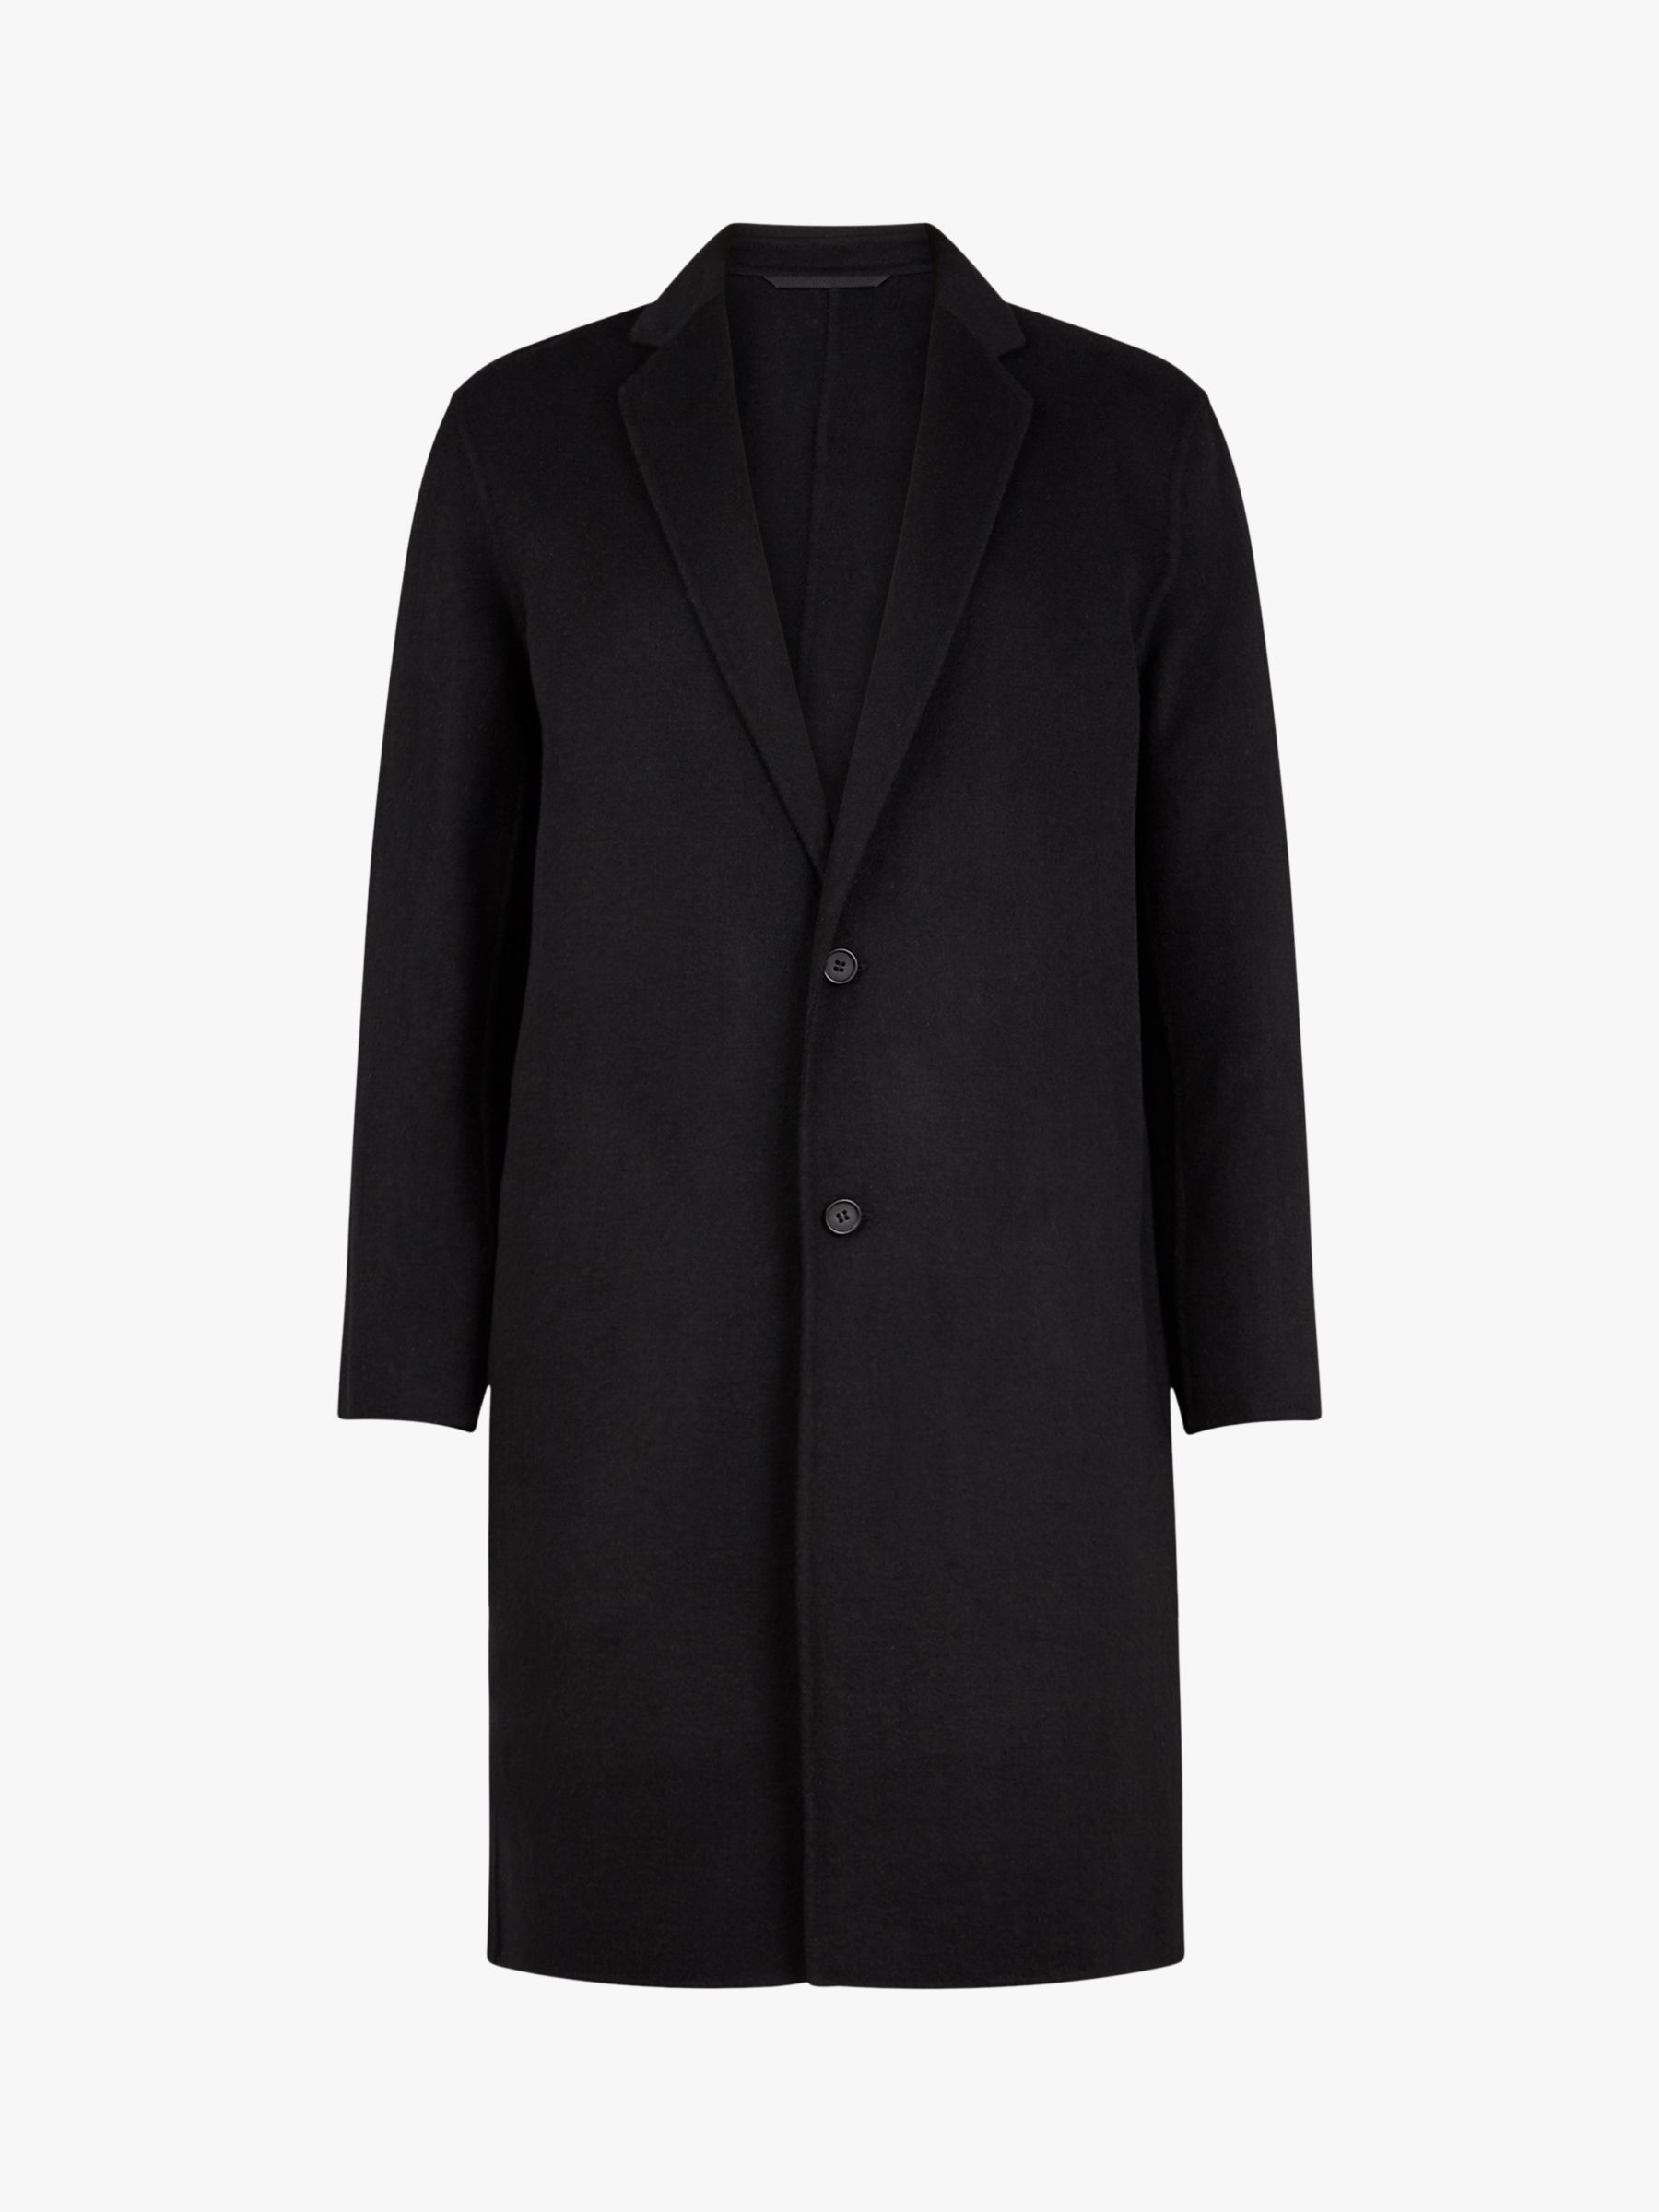 AllSaints Foley Wool-Blend Overcoat at John Lewis & Partners